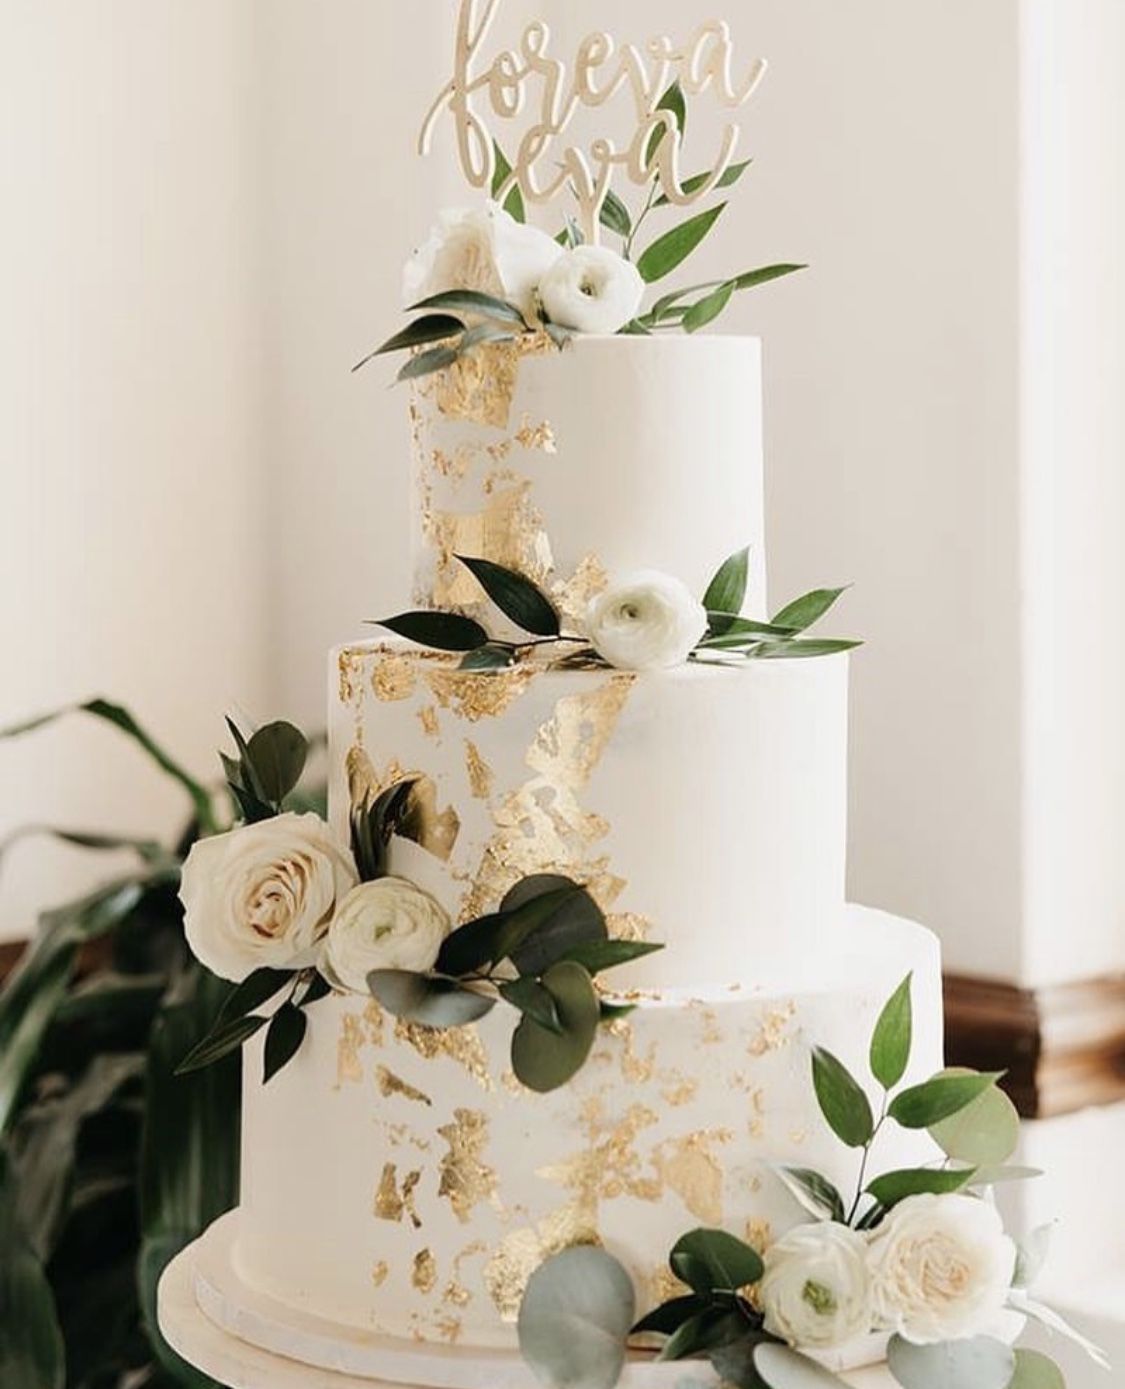 White wedding cake with gold flakes